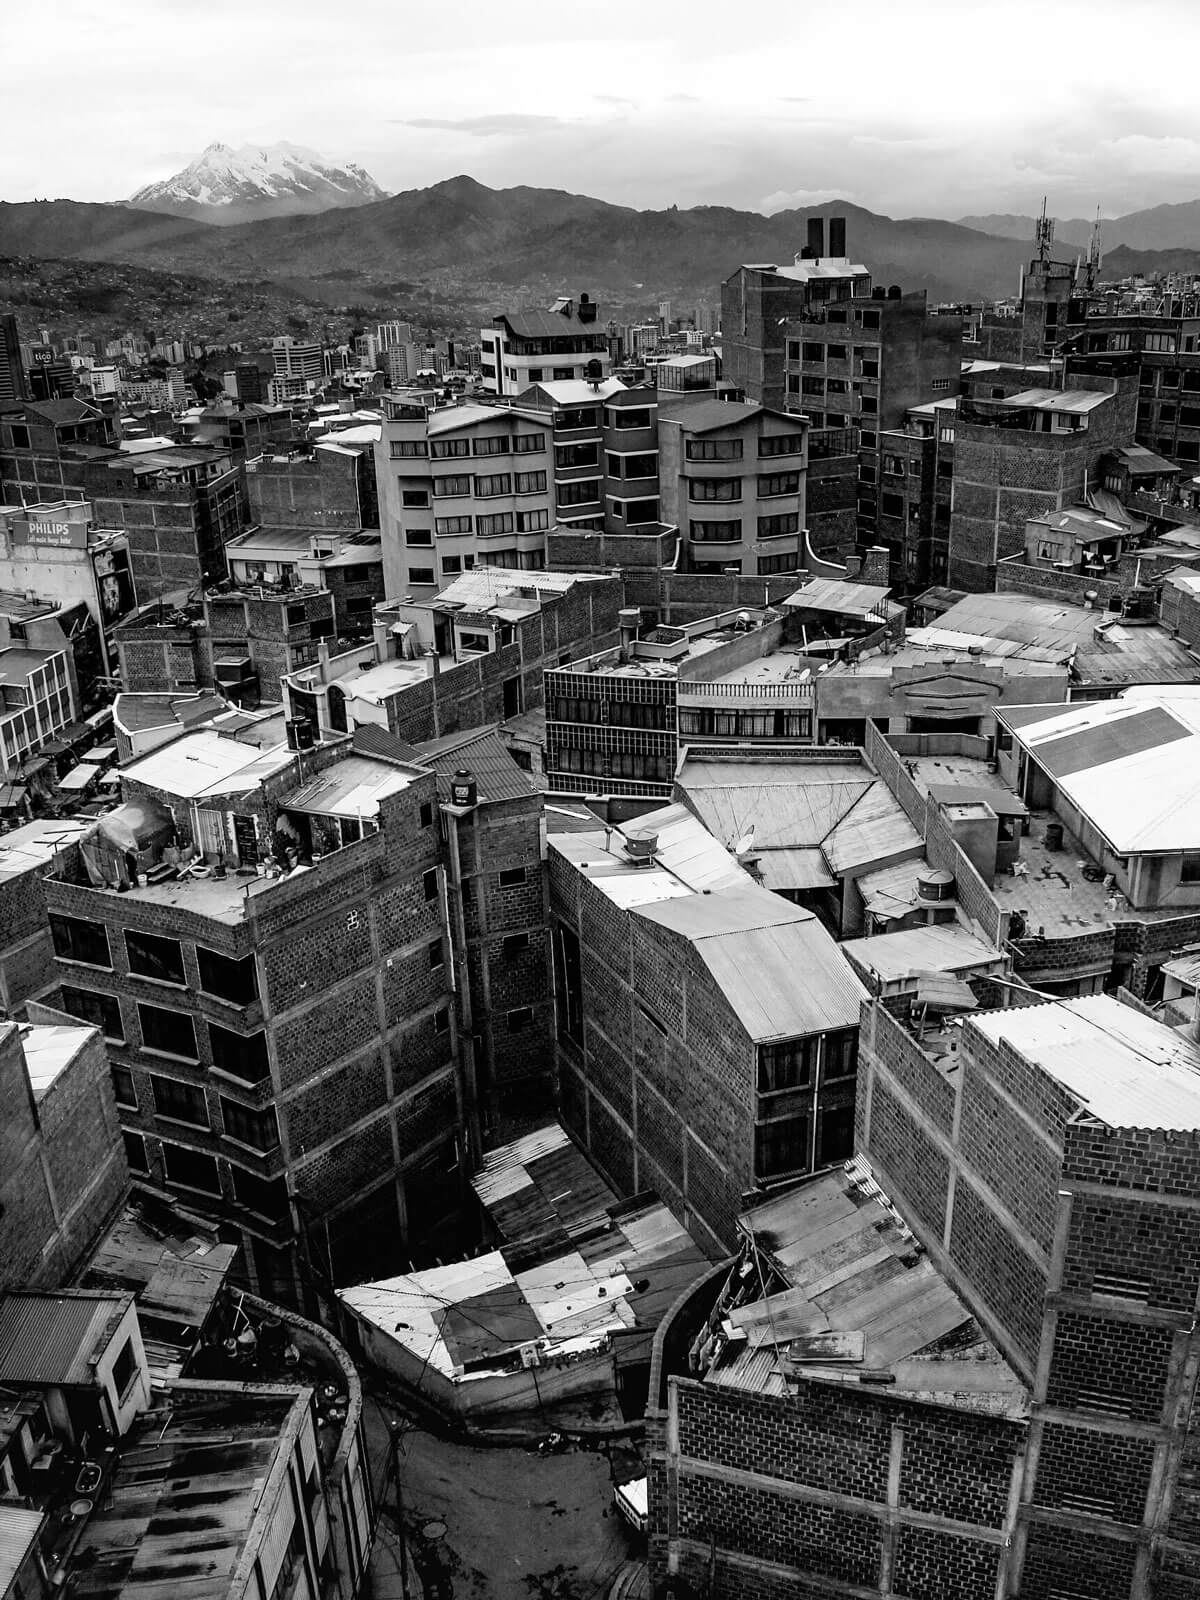 The Illimani looking at the city, La Paz, Bolivia